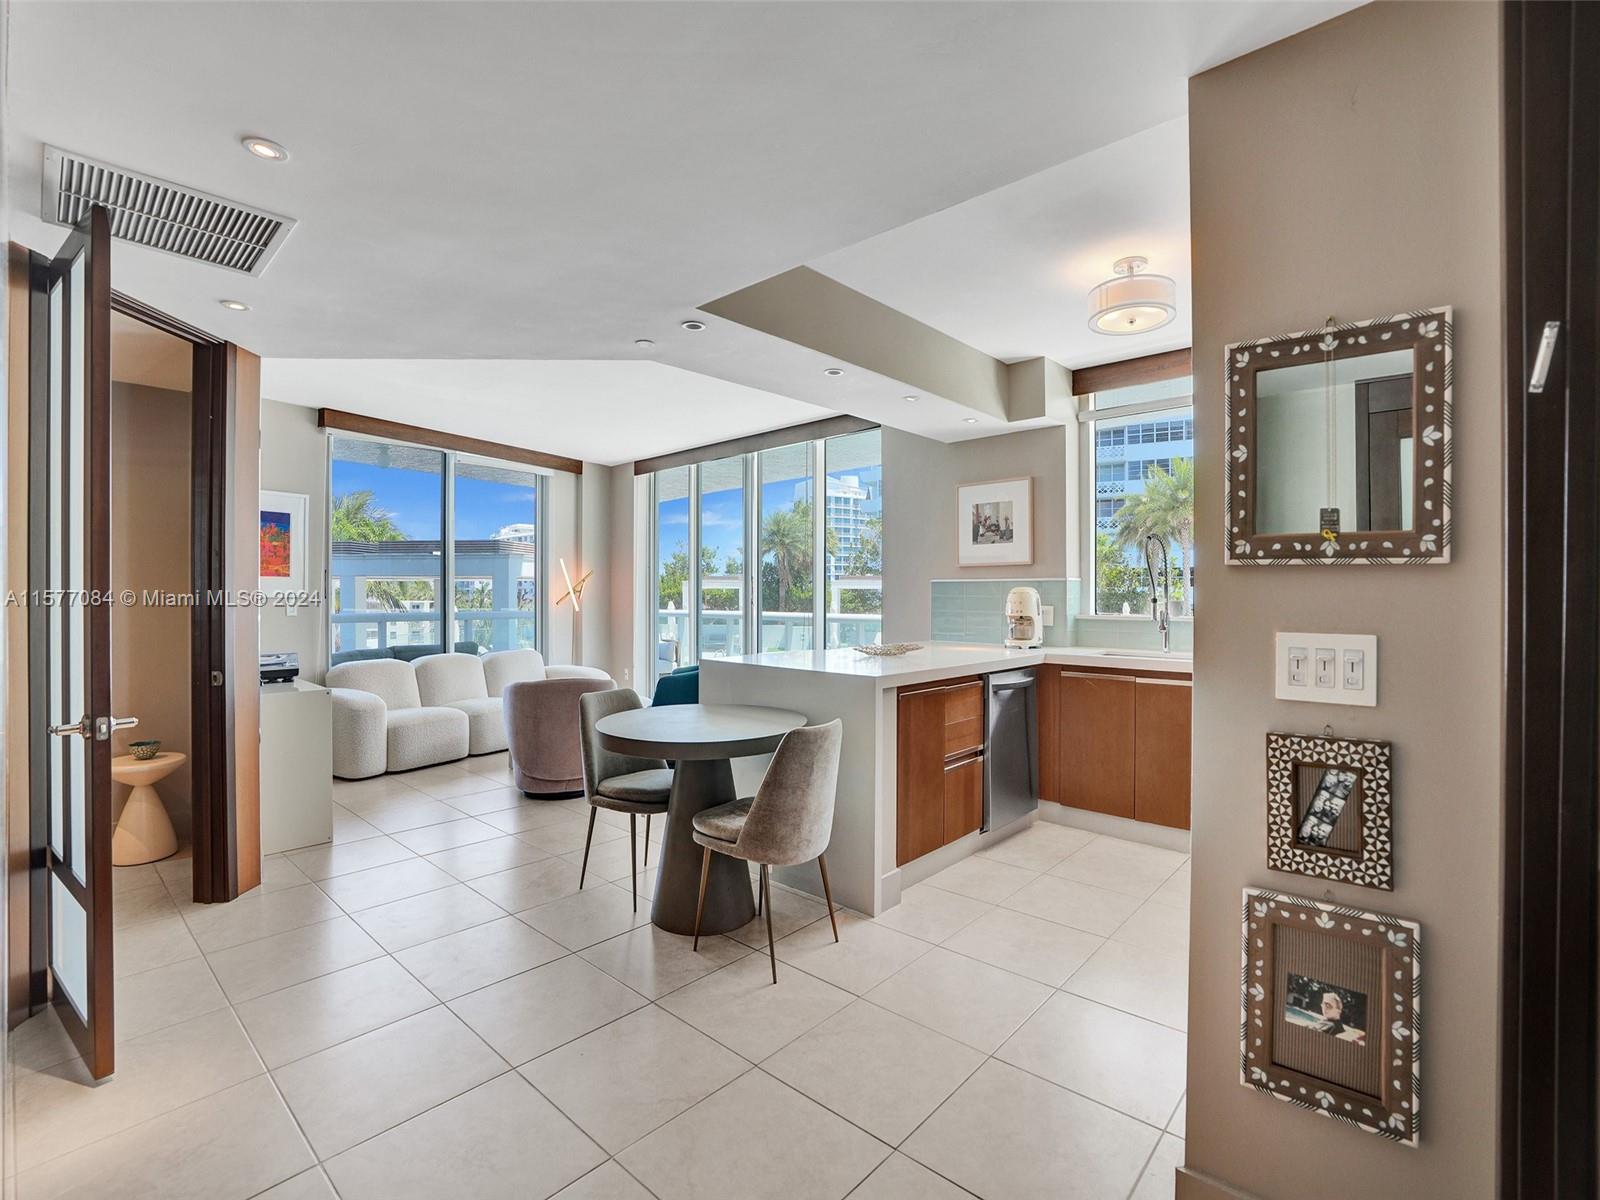 Property for Sale at 10 Venetian Way 405, Miami Beach, Miami-Dade County, Florida - Bedrooms: 1 
Bathrooms: 2  - $799,000